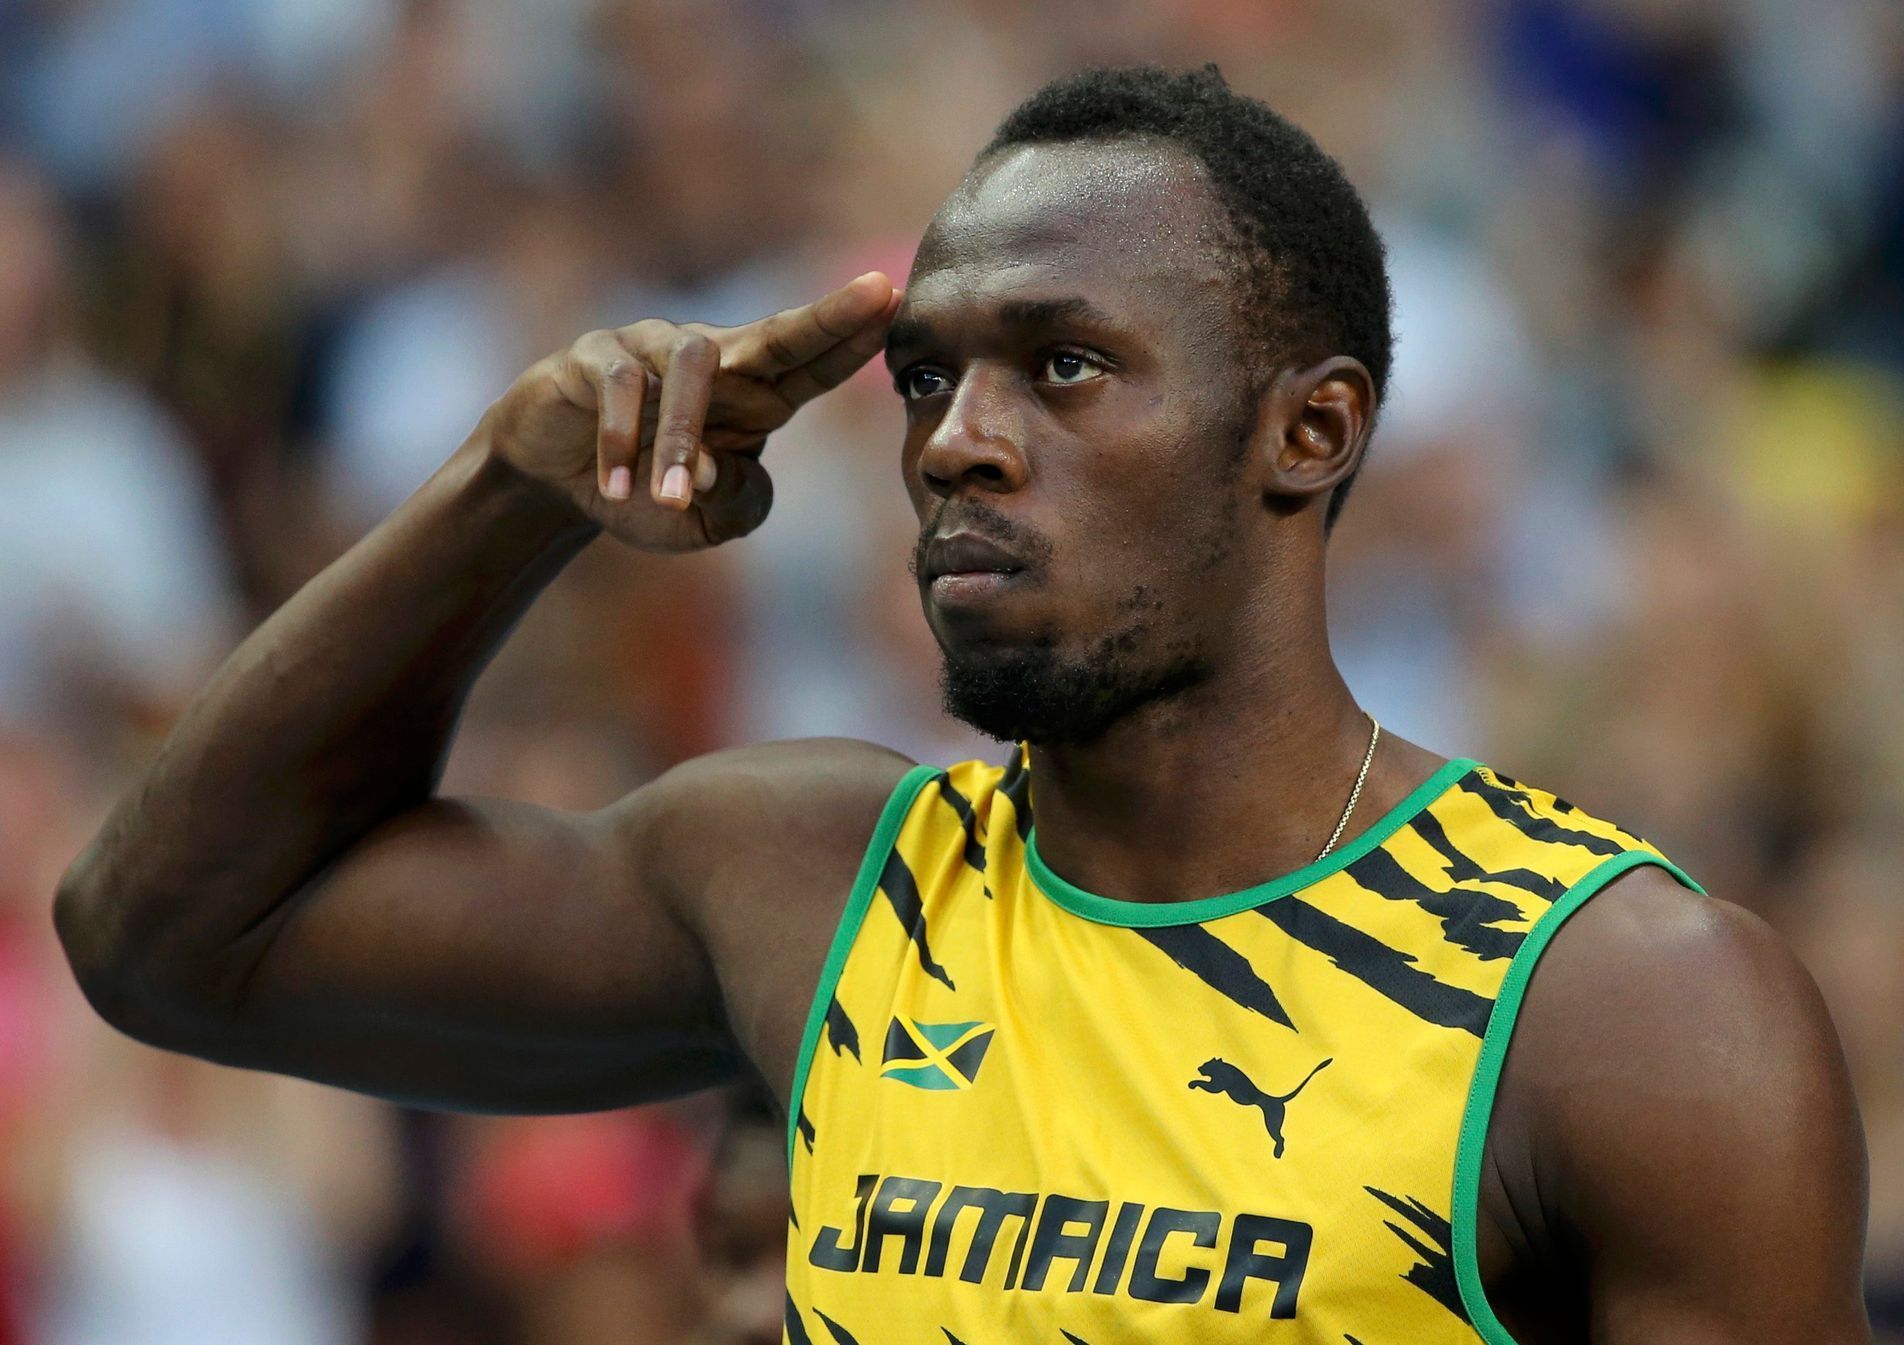 MS v atletice 2013, 100 m: Usain Bolt